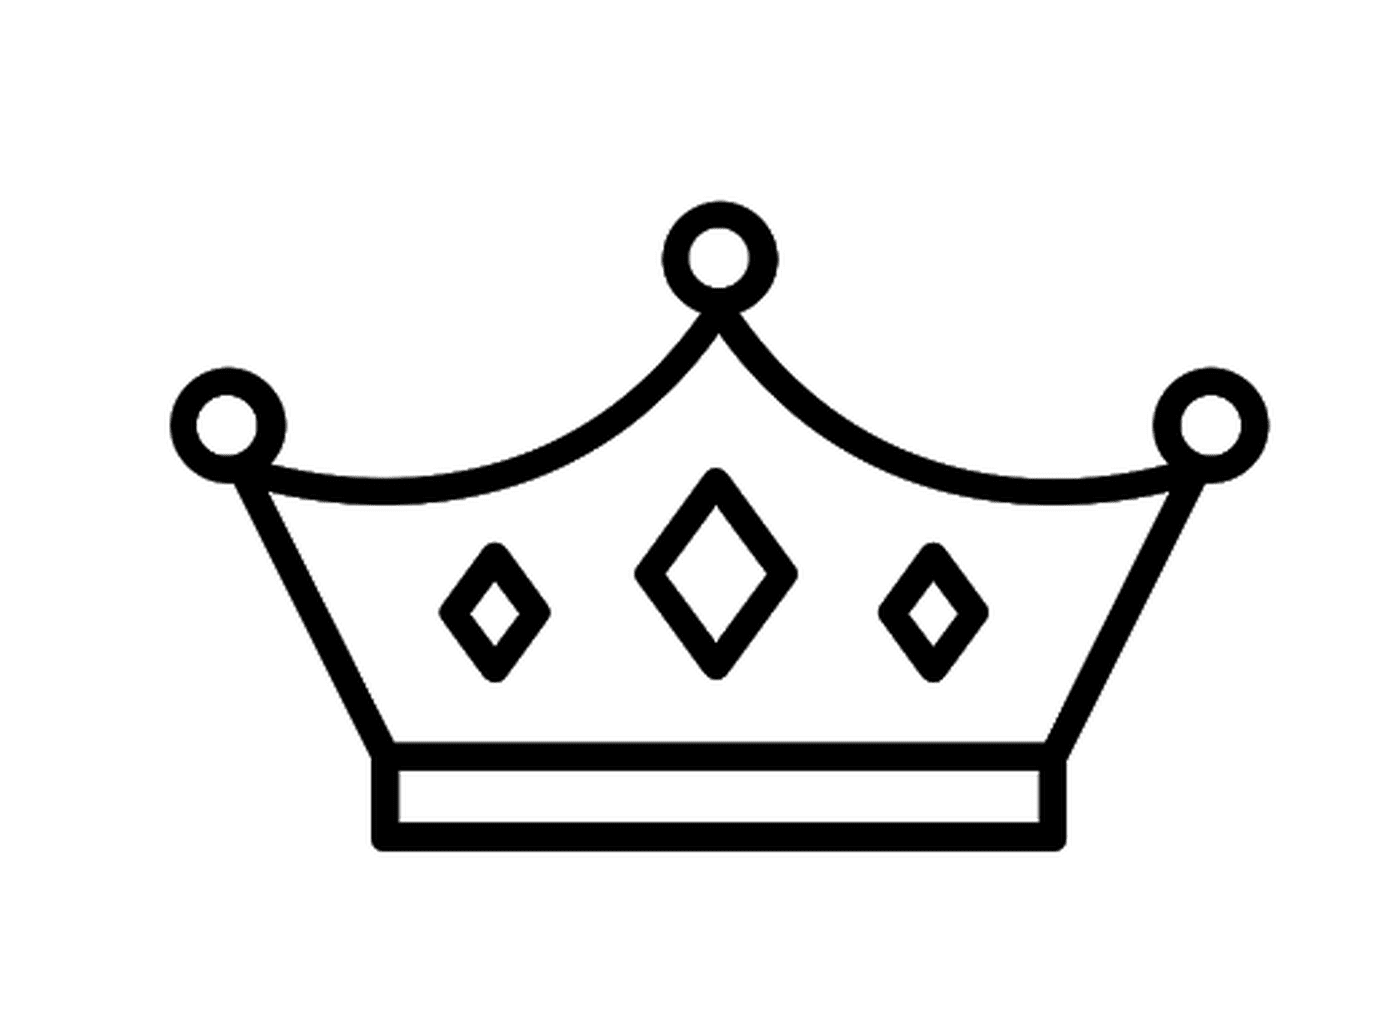  A crown 